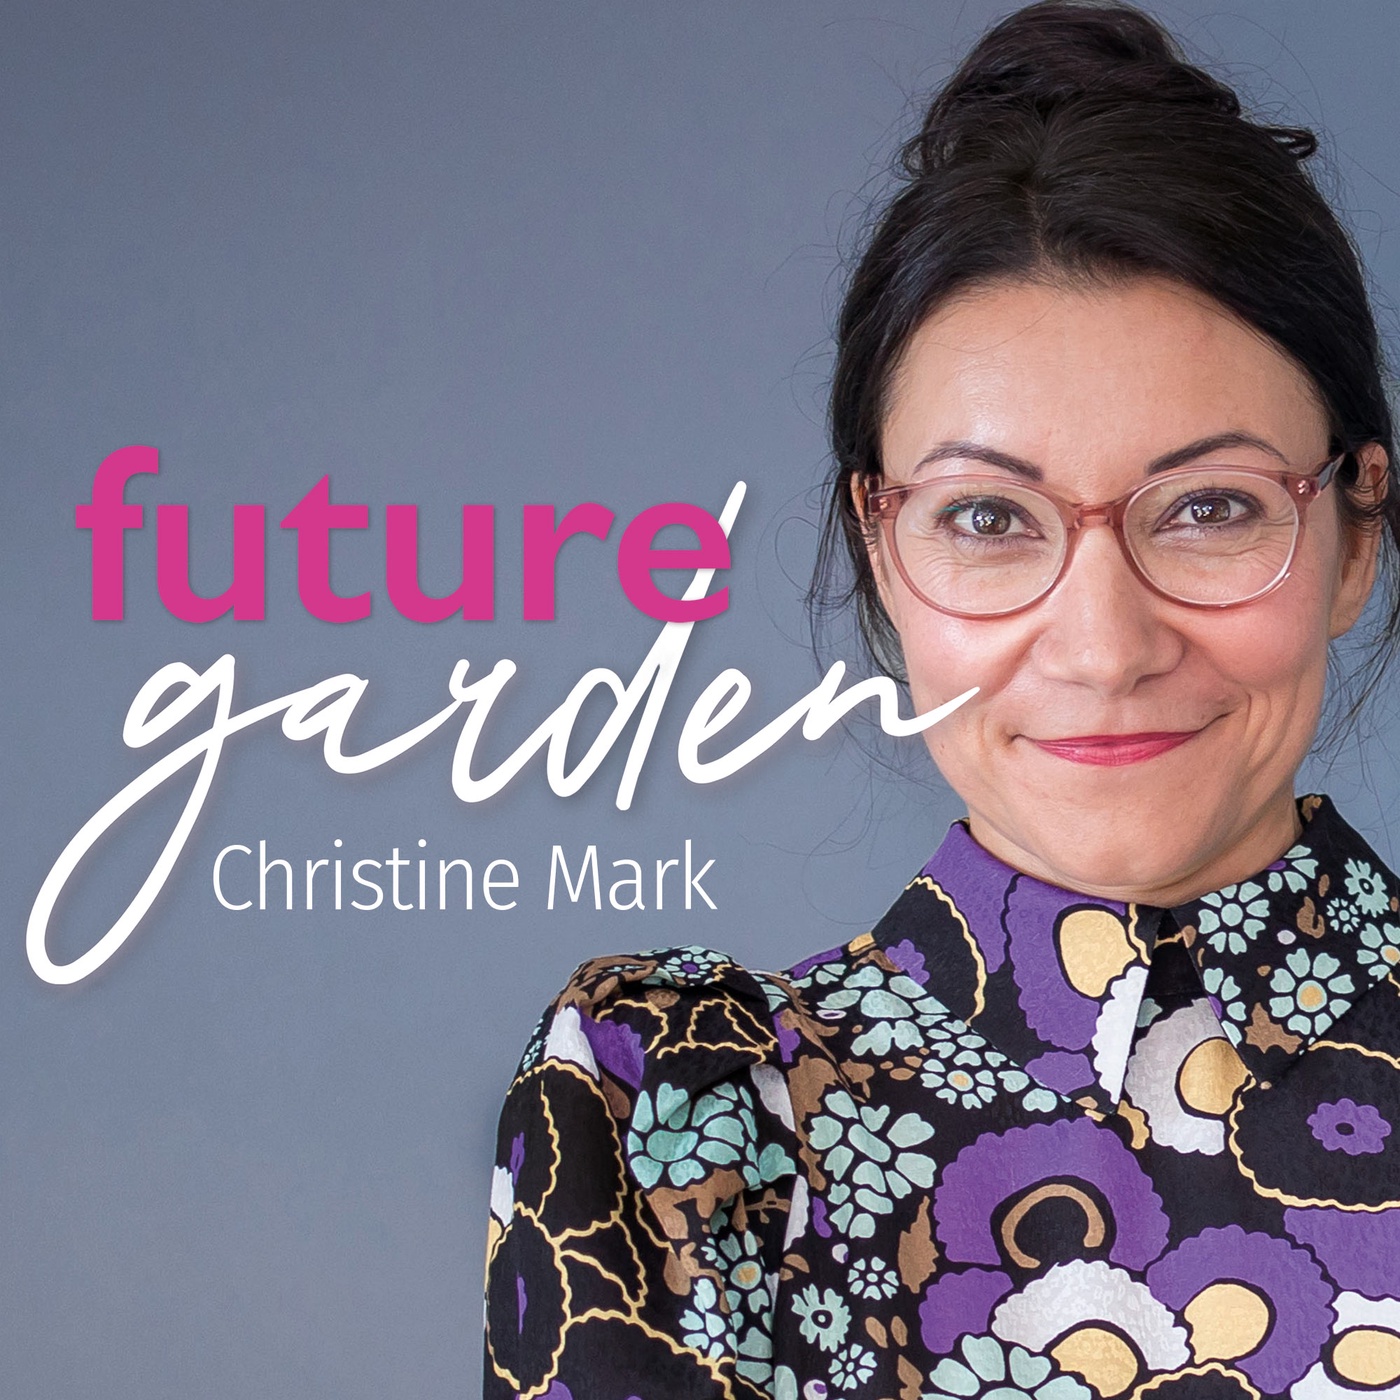 Futuregarden - Christine Mark